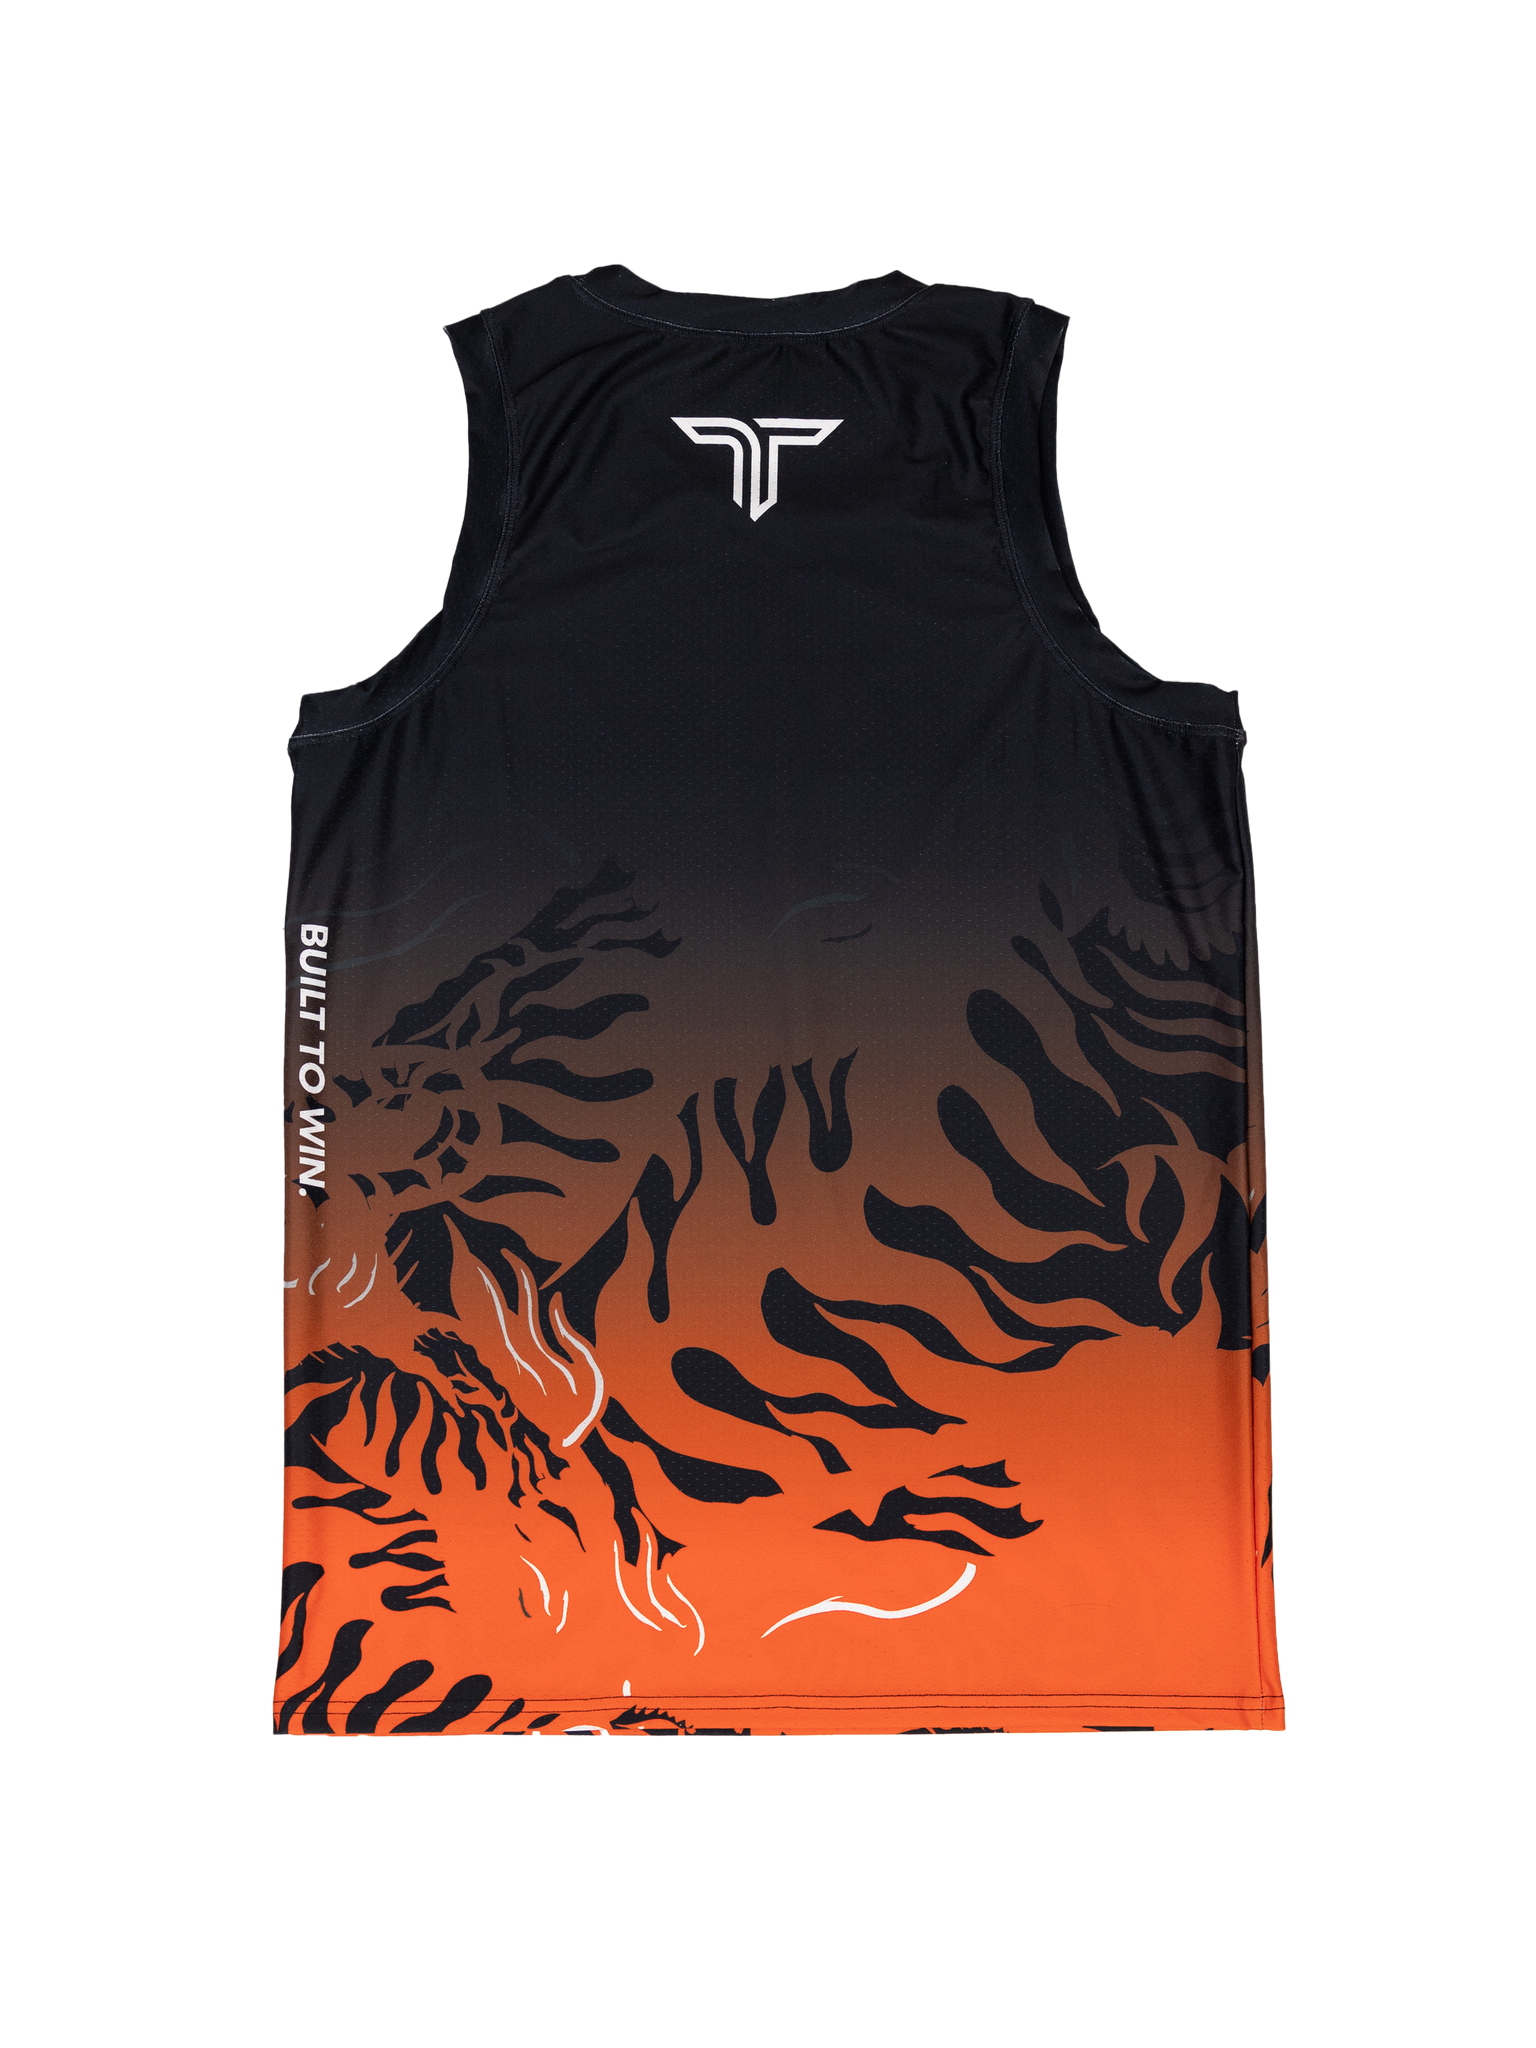 'Tiger Fight' Sleeveless Jersey - Caution Orange